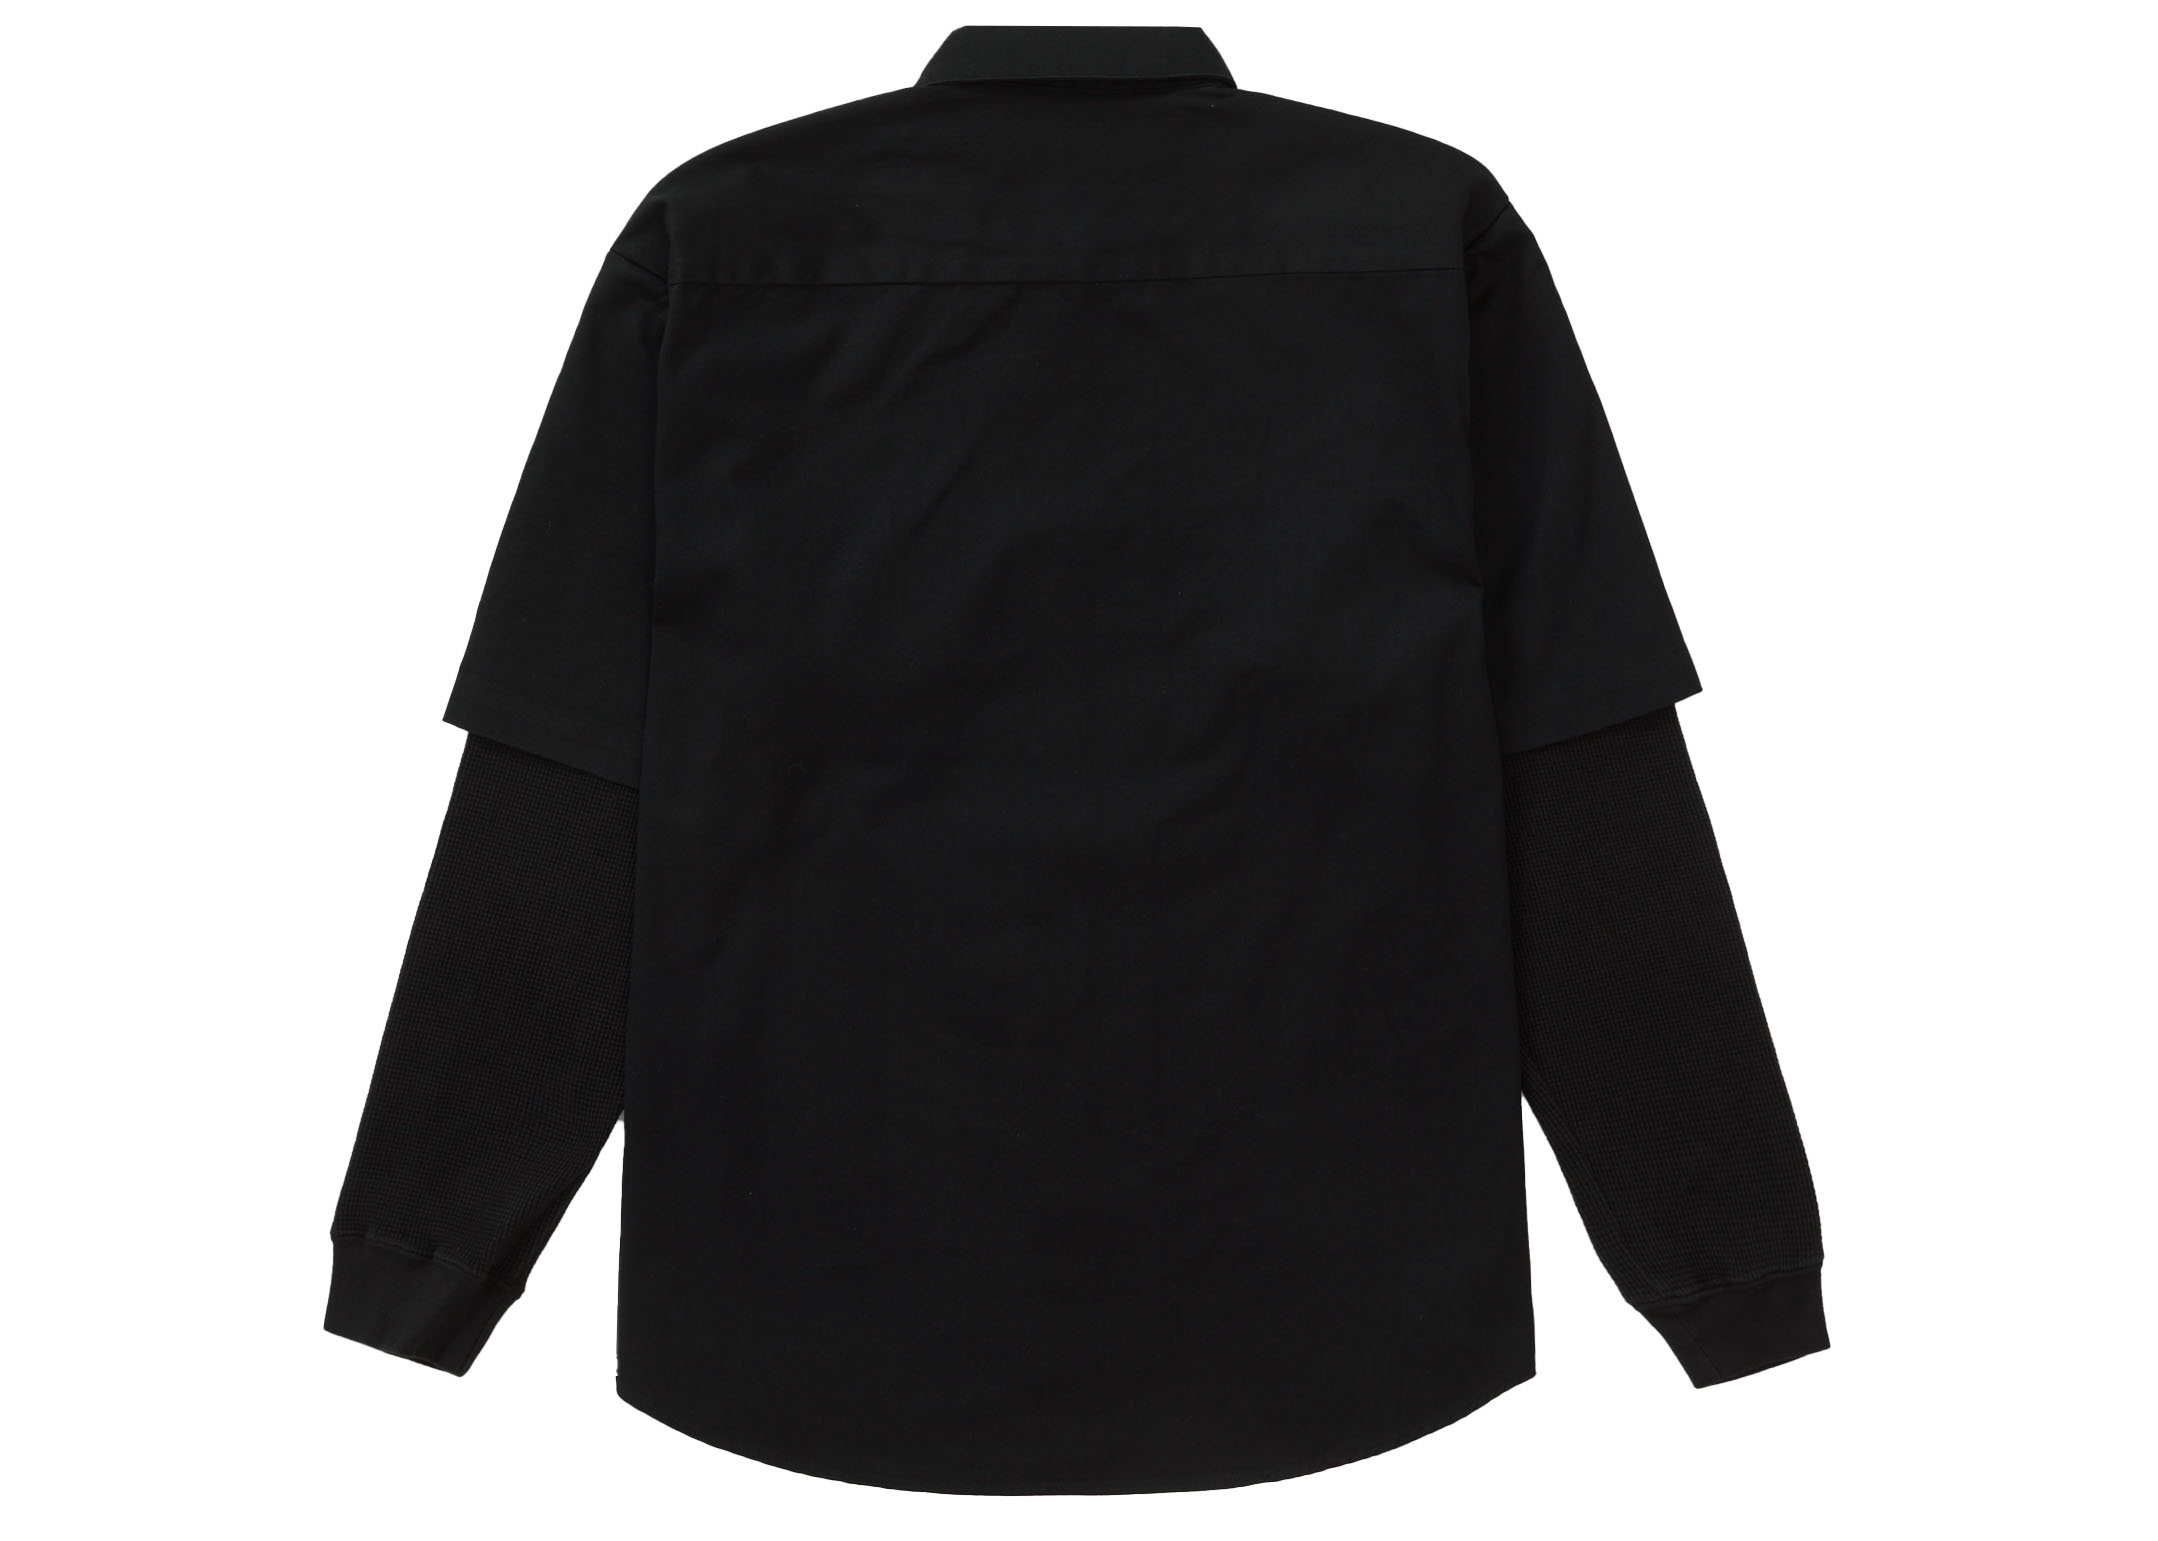 Supreme Thermal Sleeve Work Shirt Black